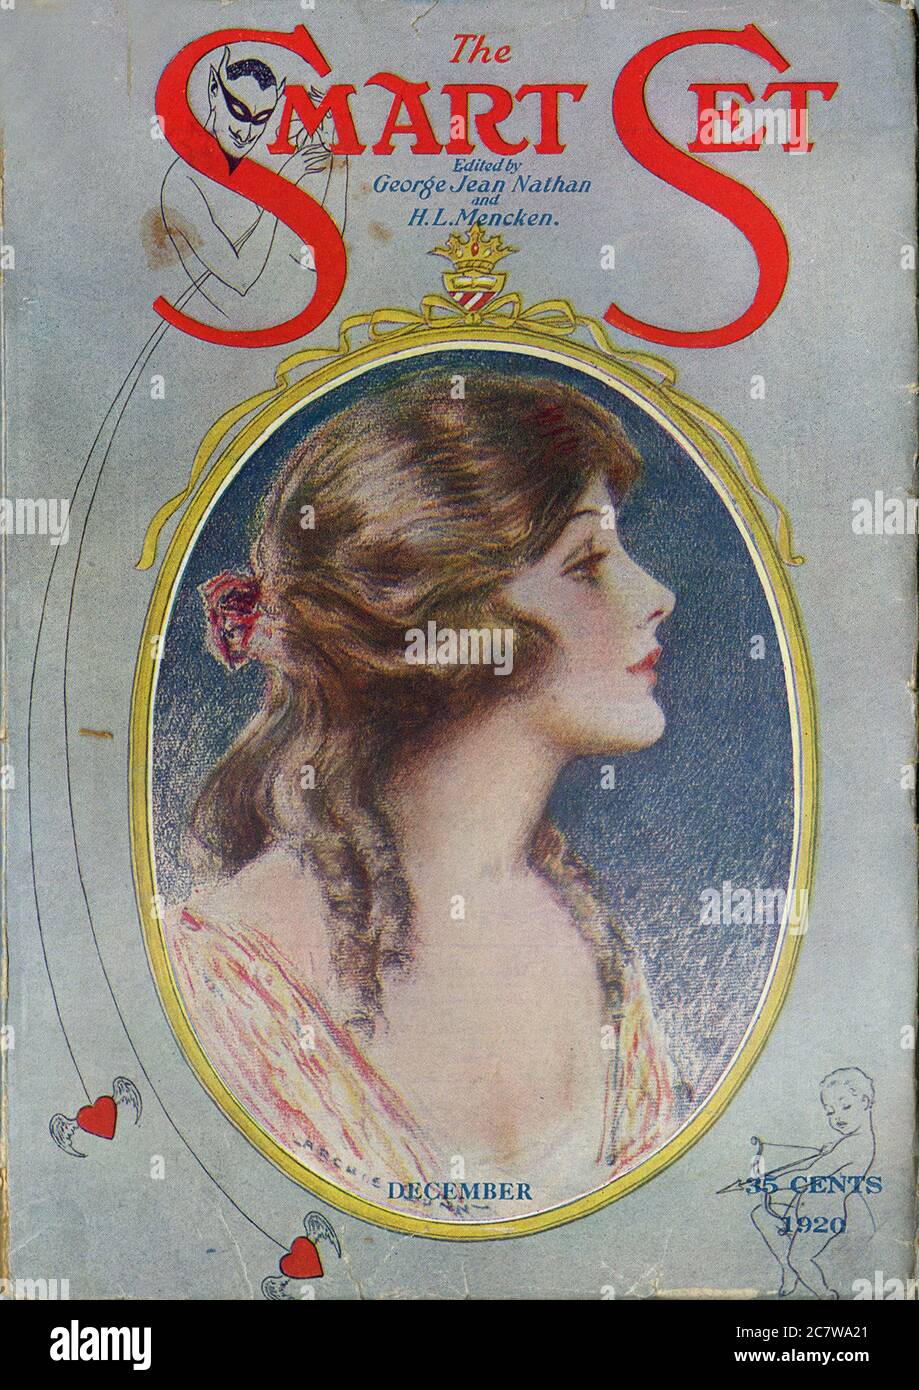 The Smart Set - December 1920 - Vintage american literary magazine Stock Photo